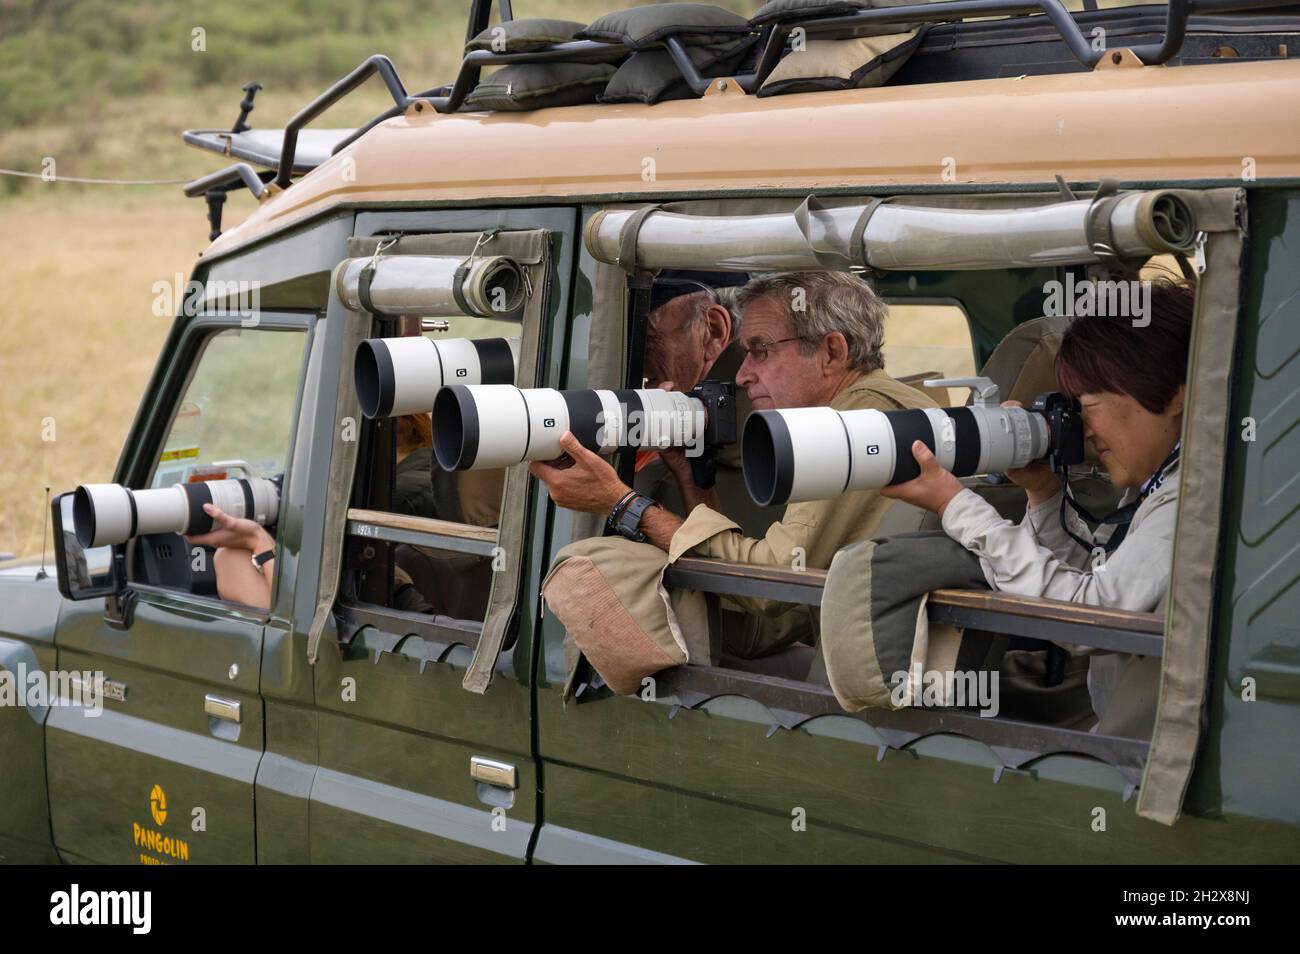 Group of tourists in a 4x4 Toyota landruiser with large SLR camera waiting, Masai Mara, Kenya Stock Photo